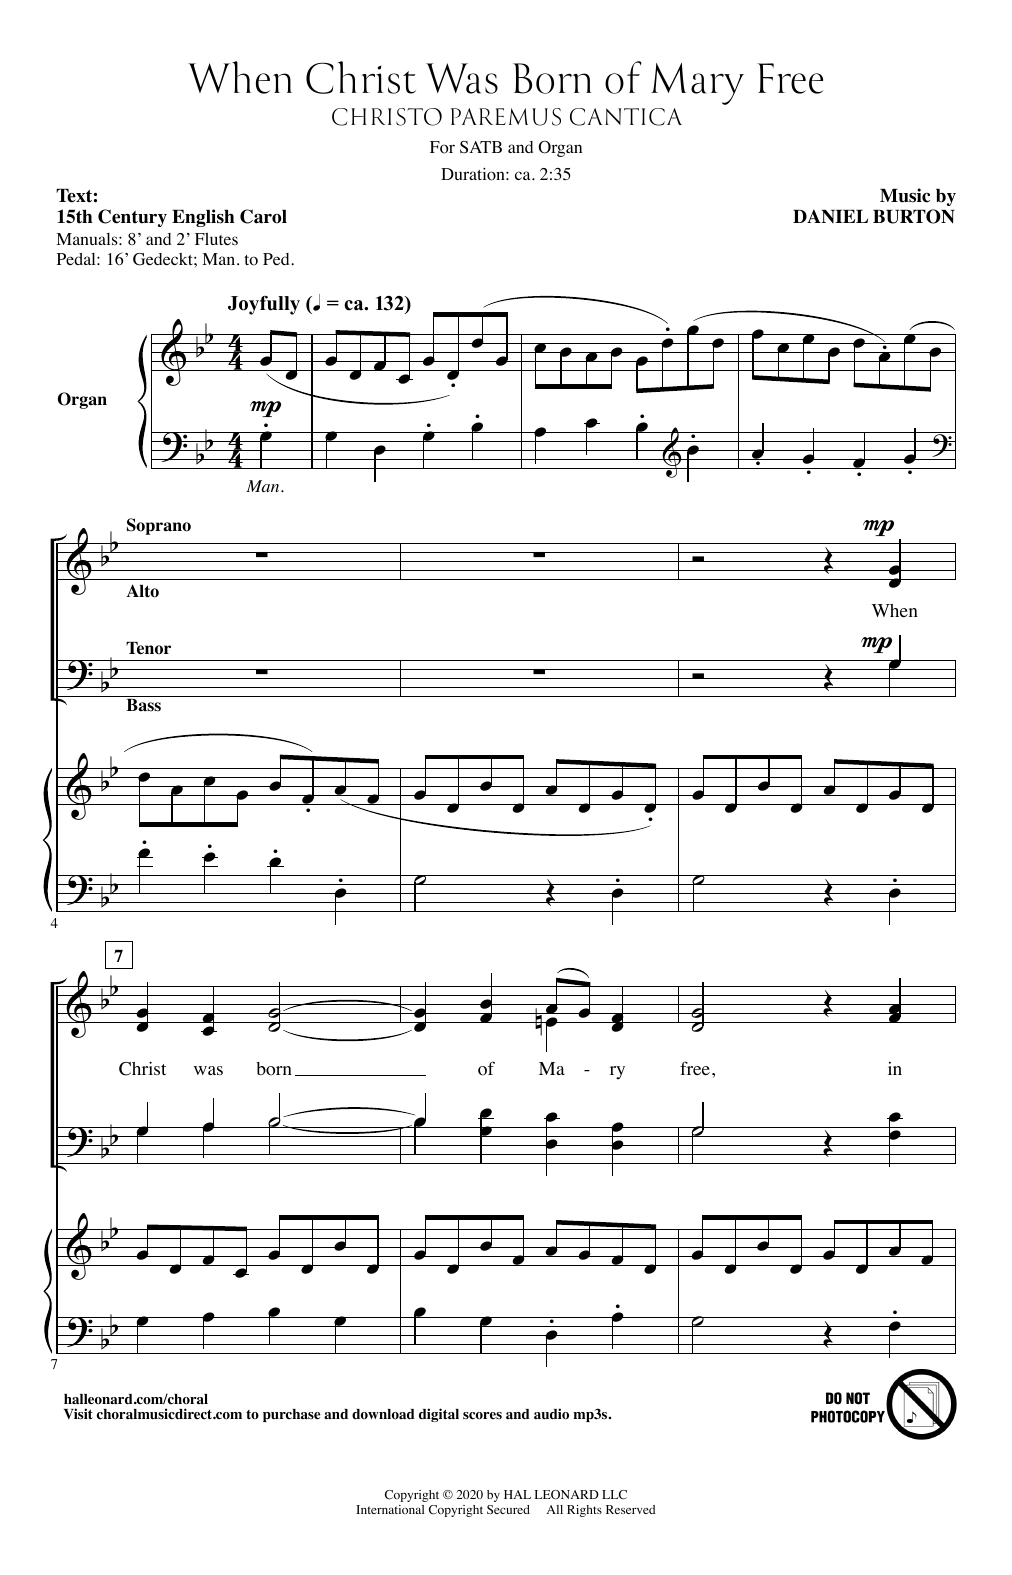 Daniel Burton When Christ Was Born Of Mary Free (Christo Paremus Cantica) Sheet Music Notes & Chords for SATB Choir - Download or Print PDF